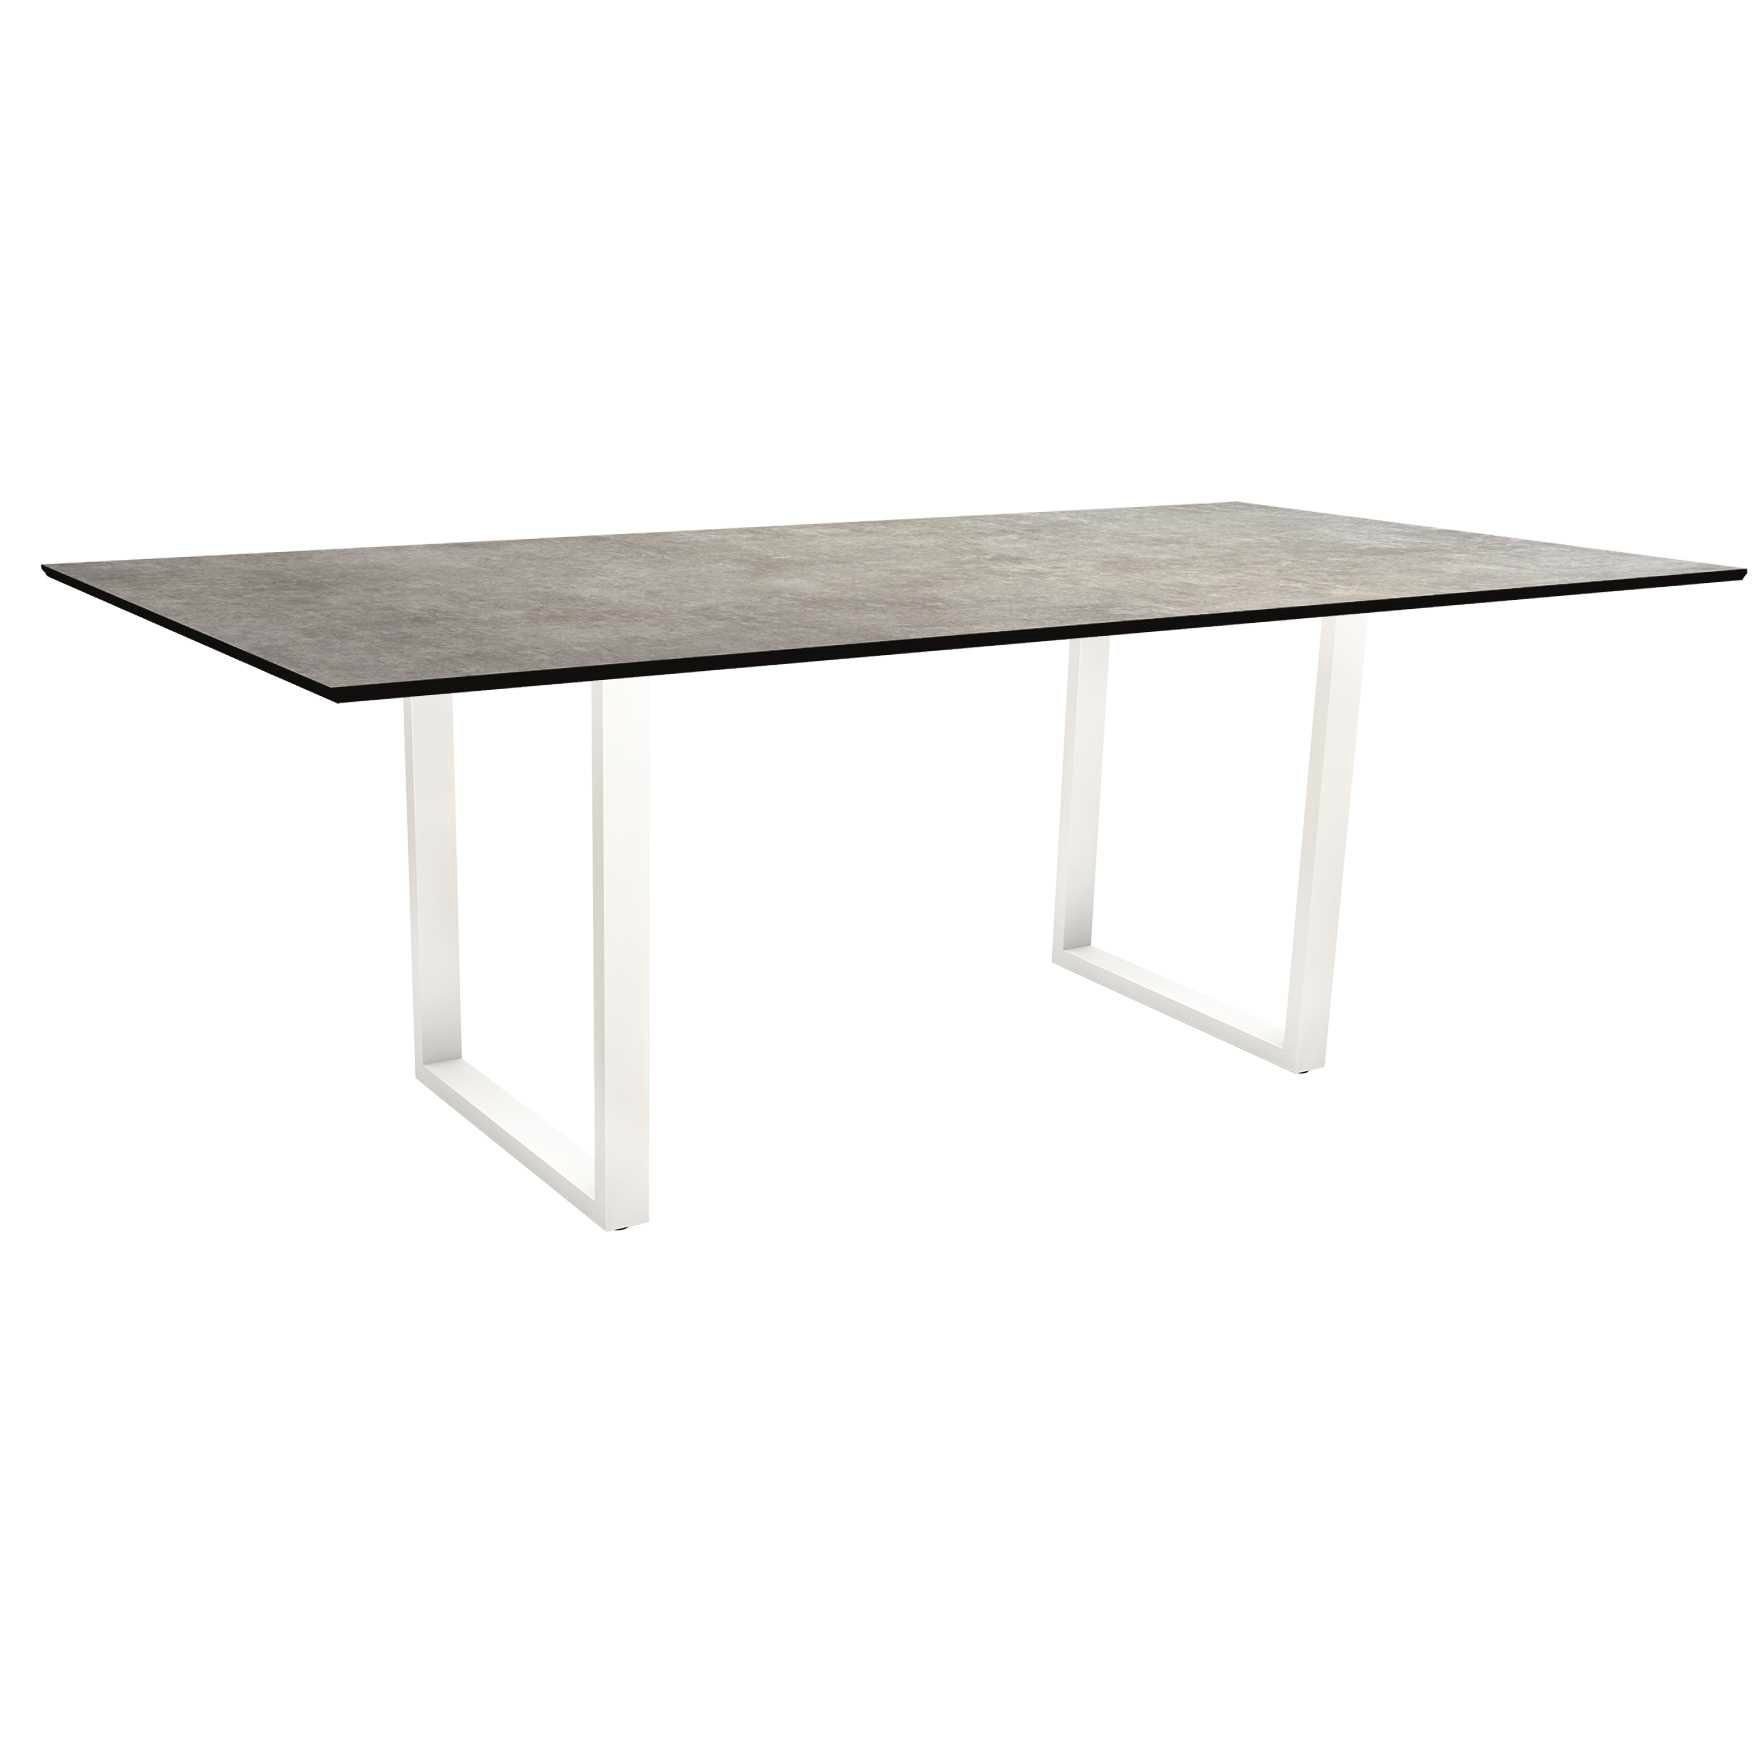 Stern Kufentisch, Maße: 200x100x73 cm, Gestell Aluminium weiß, Tischplatte HPL Metallic grau